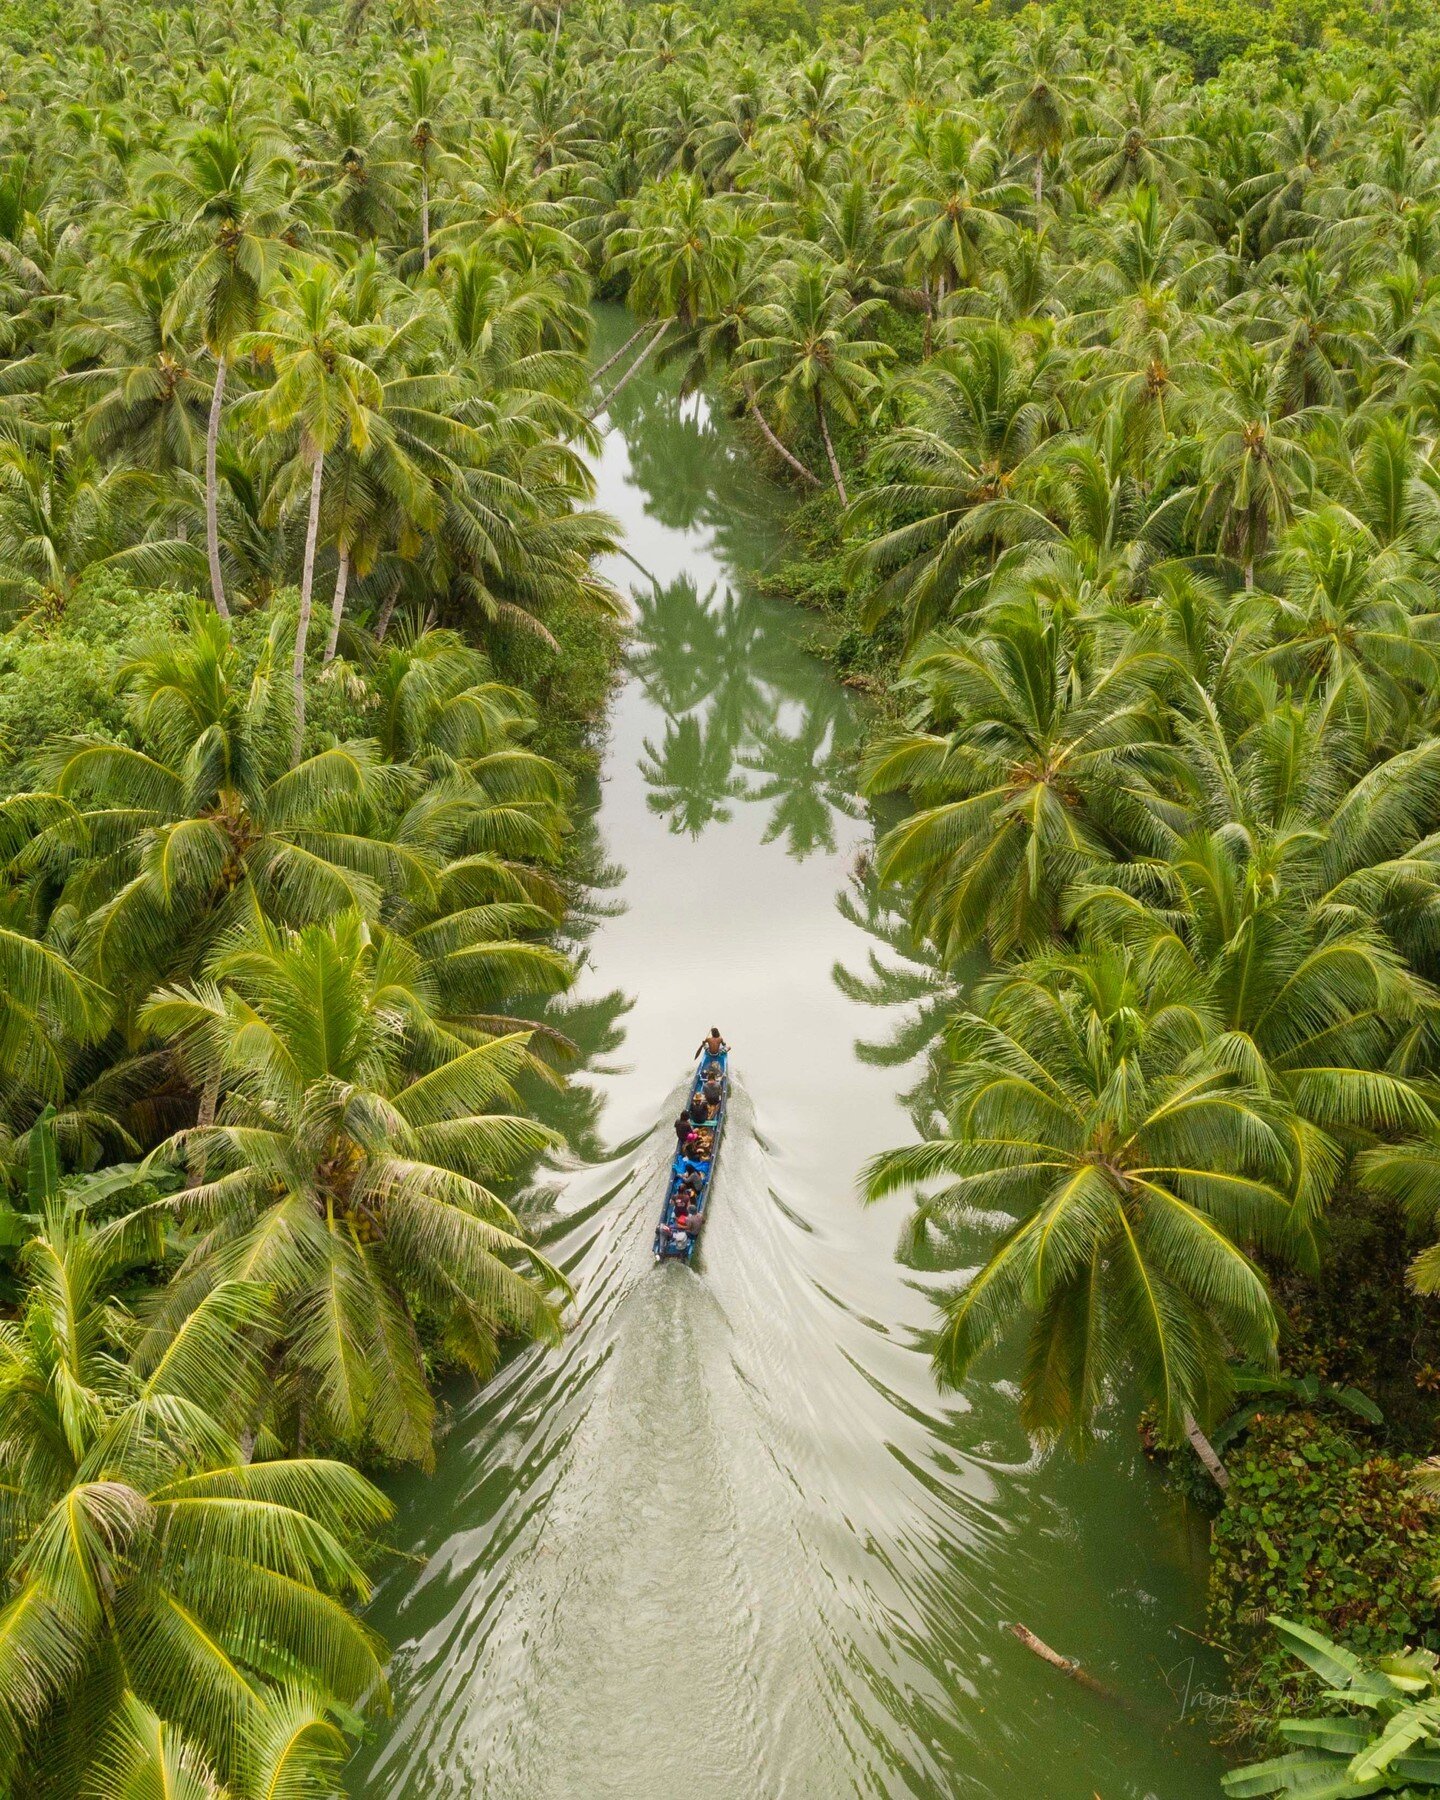 Dreaming about this little islands everyday. Mentawai 2022 who is coming with us? 

 #TuFotoNatGeo #yourshotphotographer #goplayoutside #surf #mentawai #surfing #nature #igrassetphoto #gosurf #oceanlife #islandlife #vitaminsea #naturelovers #fineart 